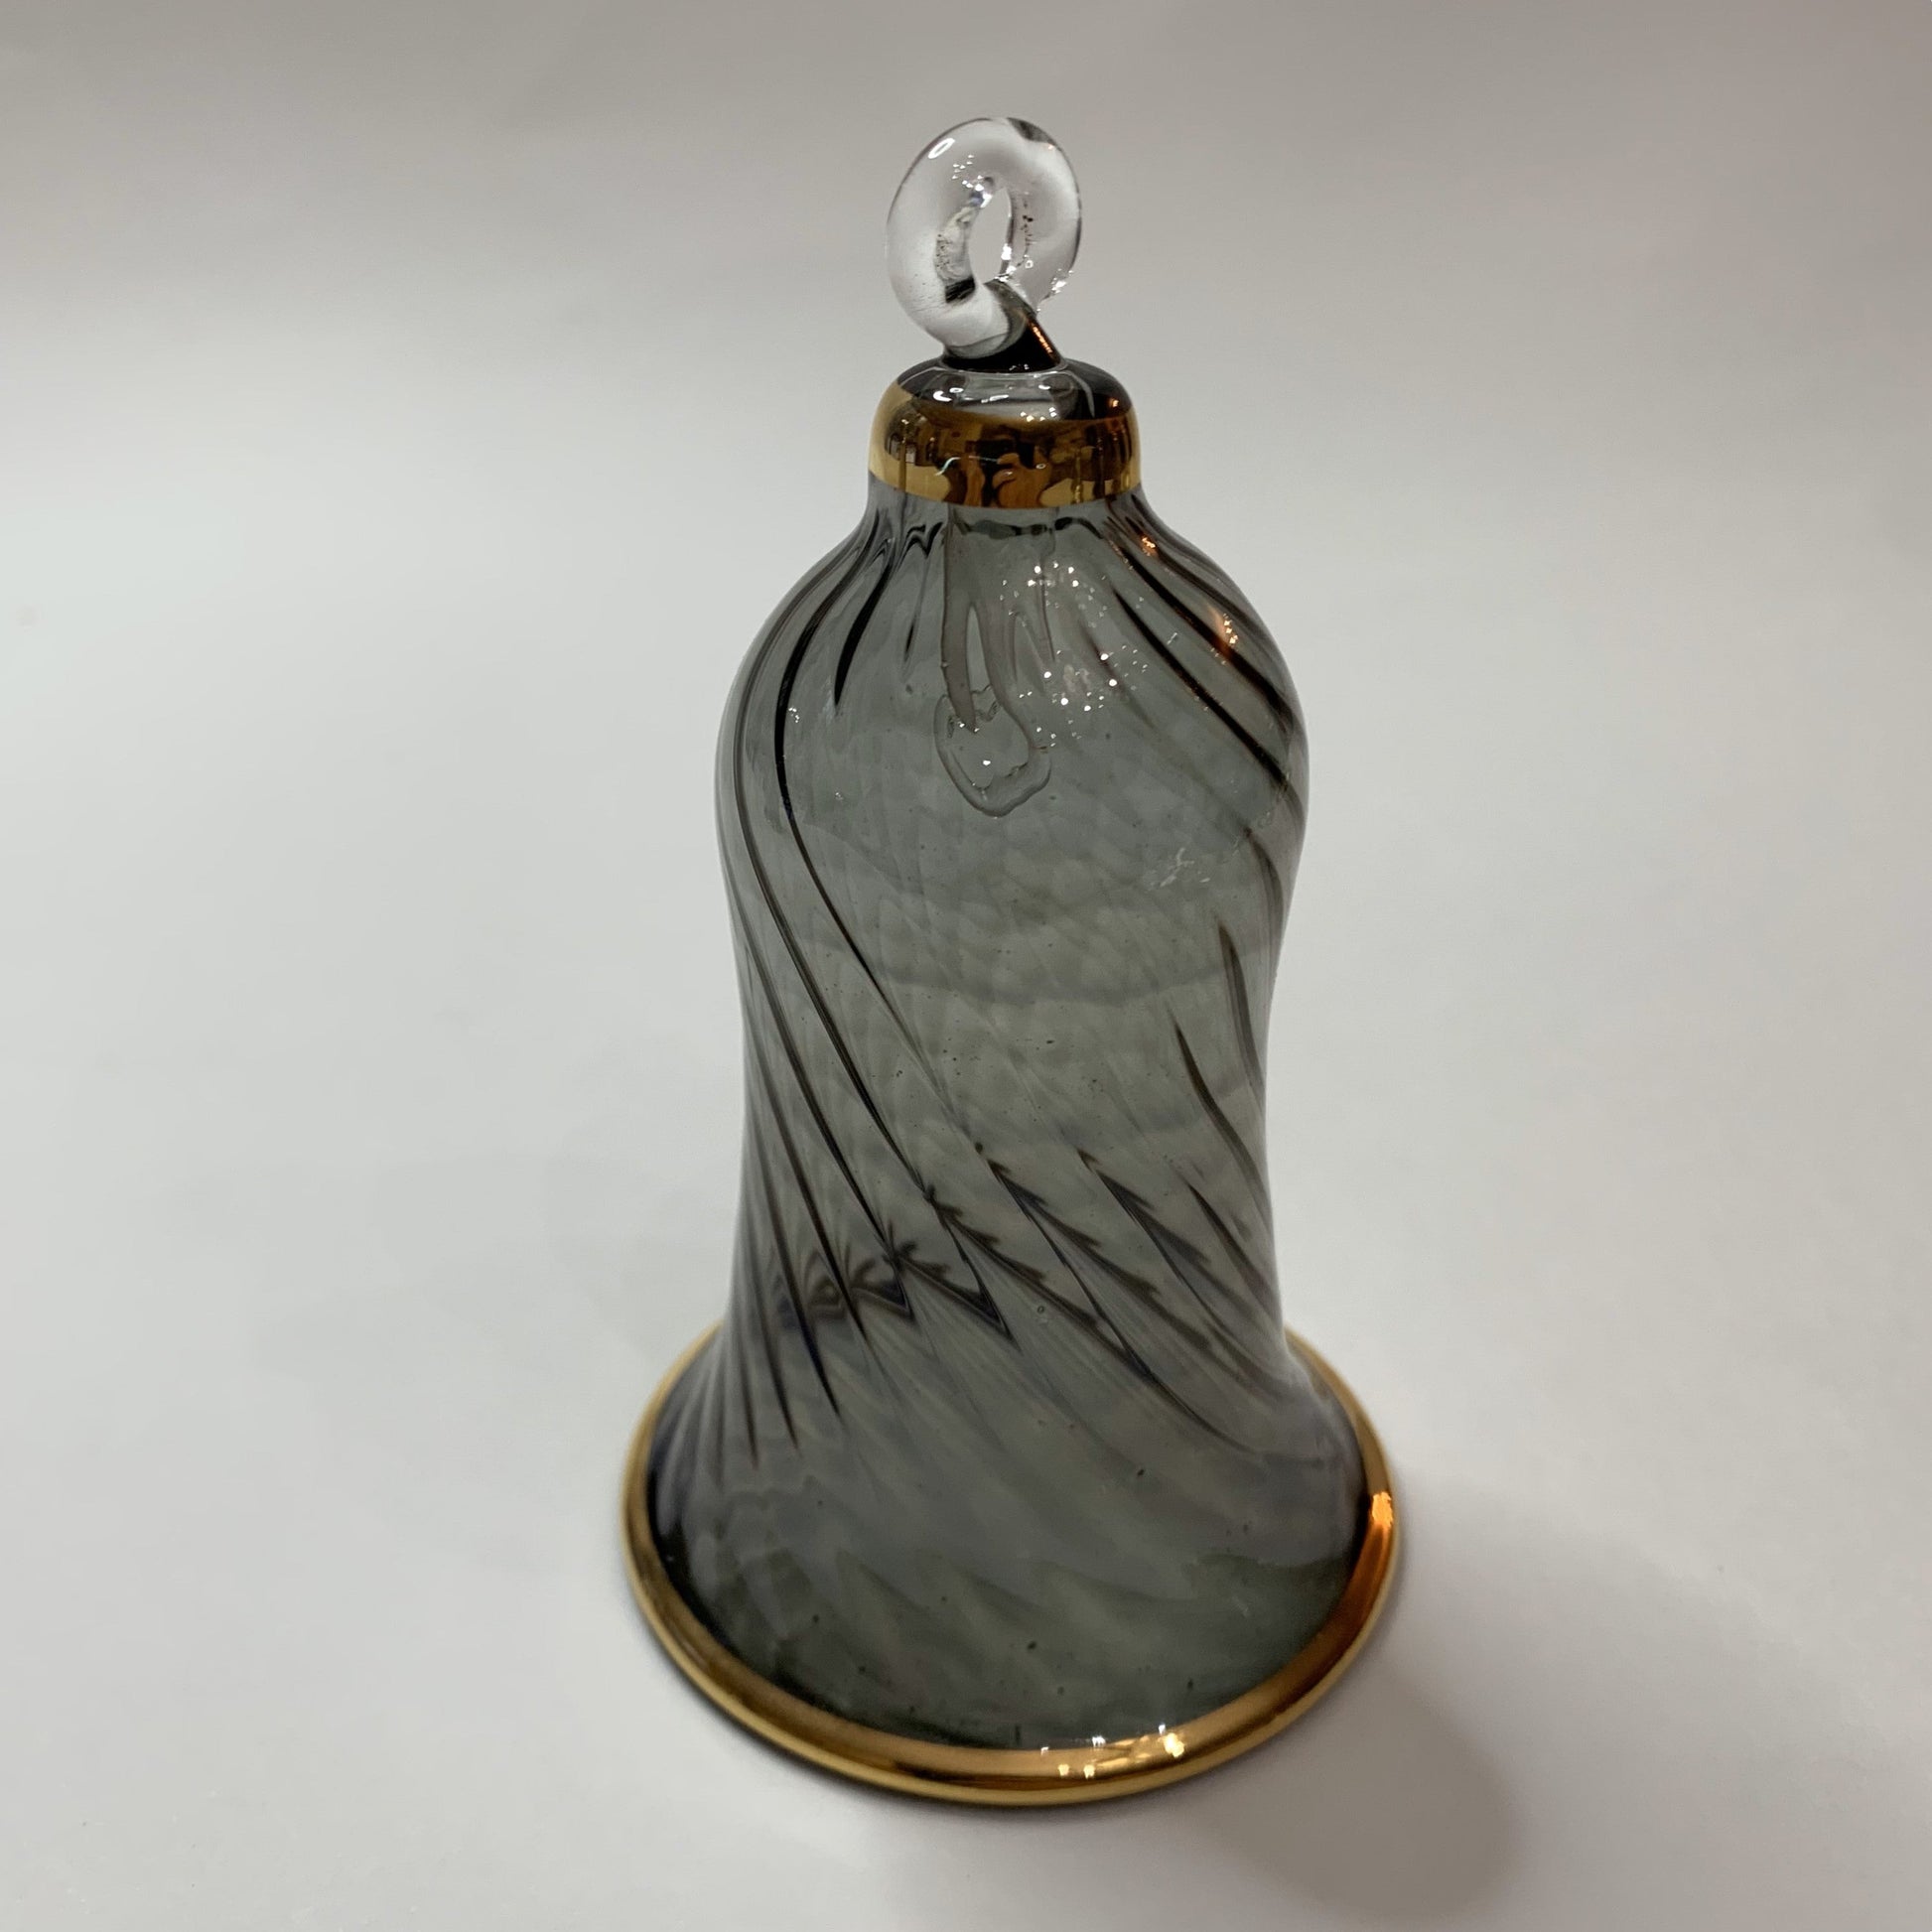 Blown Glass Ornament - Wavy Bell